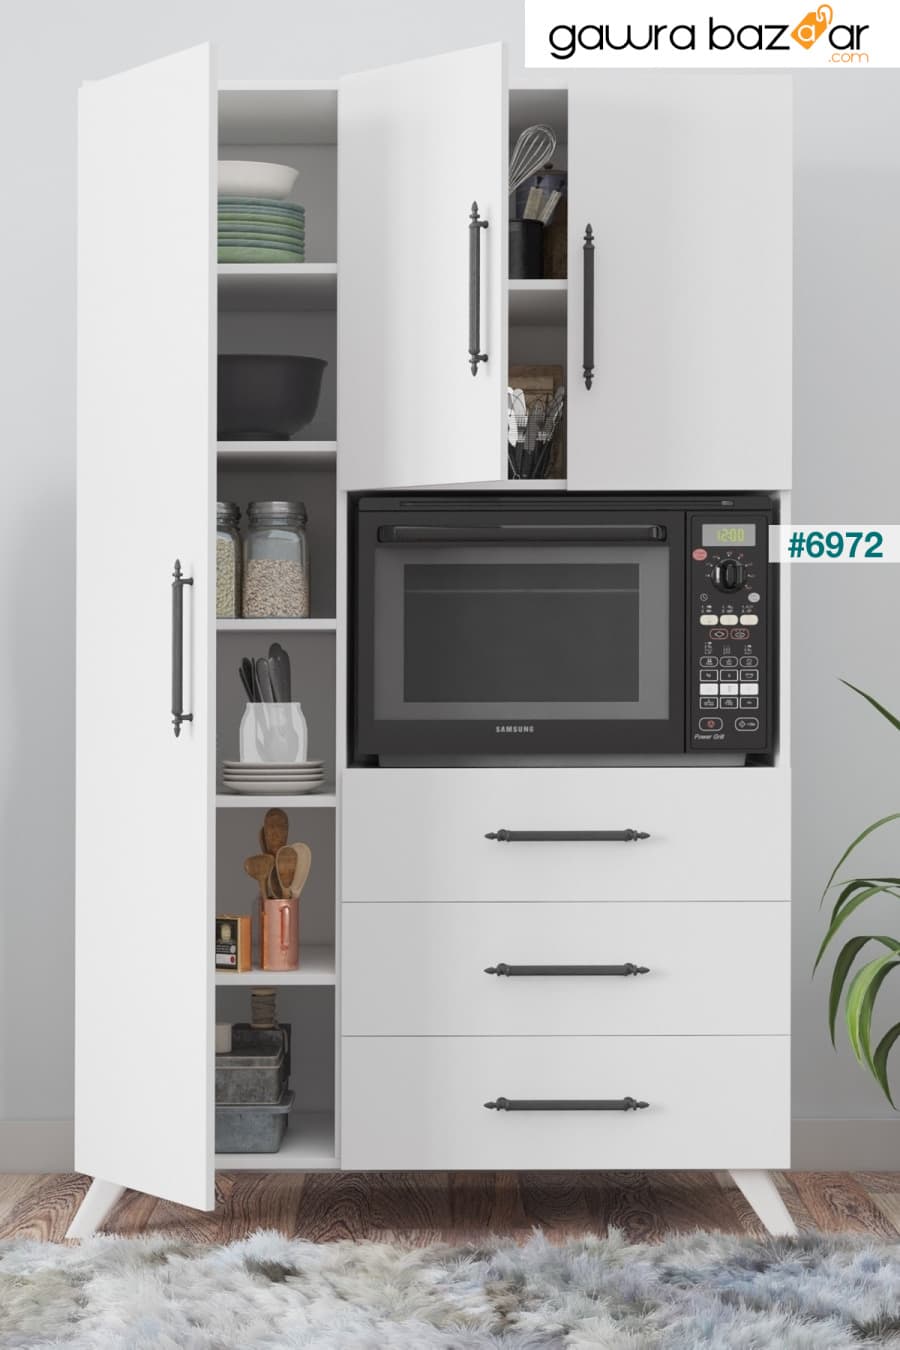 Ae-2074 Aras الأبيض خزانة مطبخ متعددة الأغراض وخزانة حمام ، مخزن ، 3 أبواب ، 3 أدراج ، قسم الفرن Aeka 3